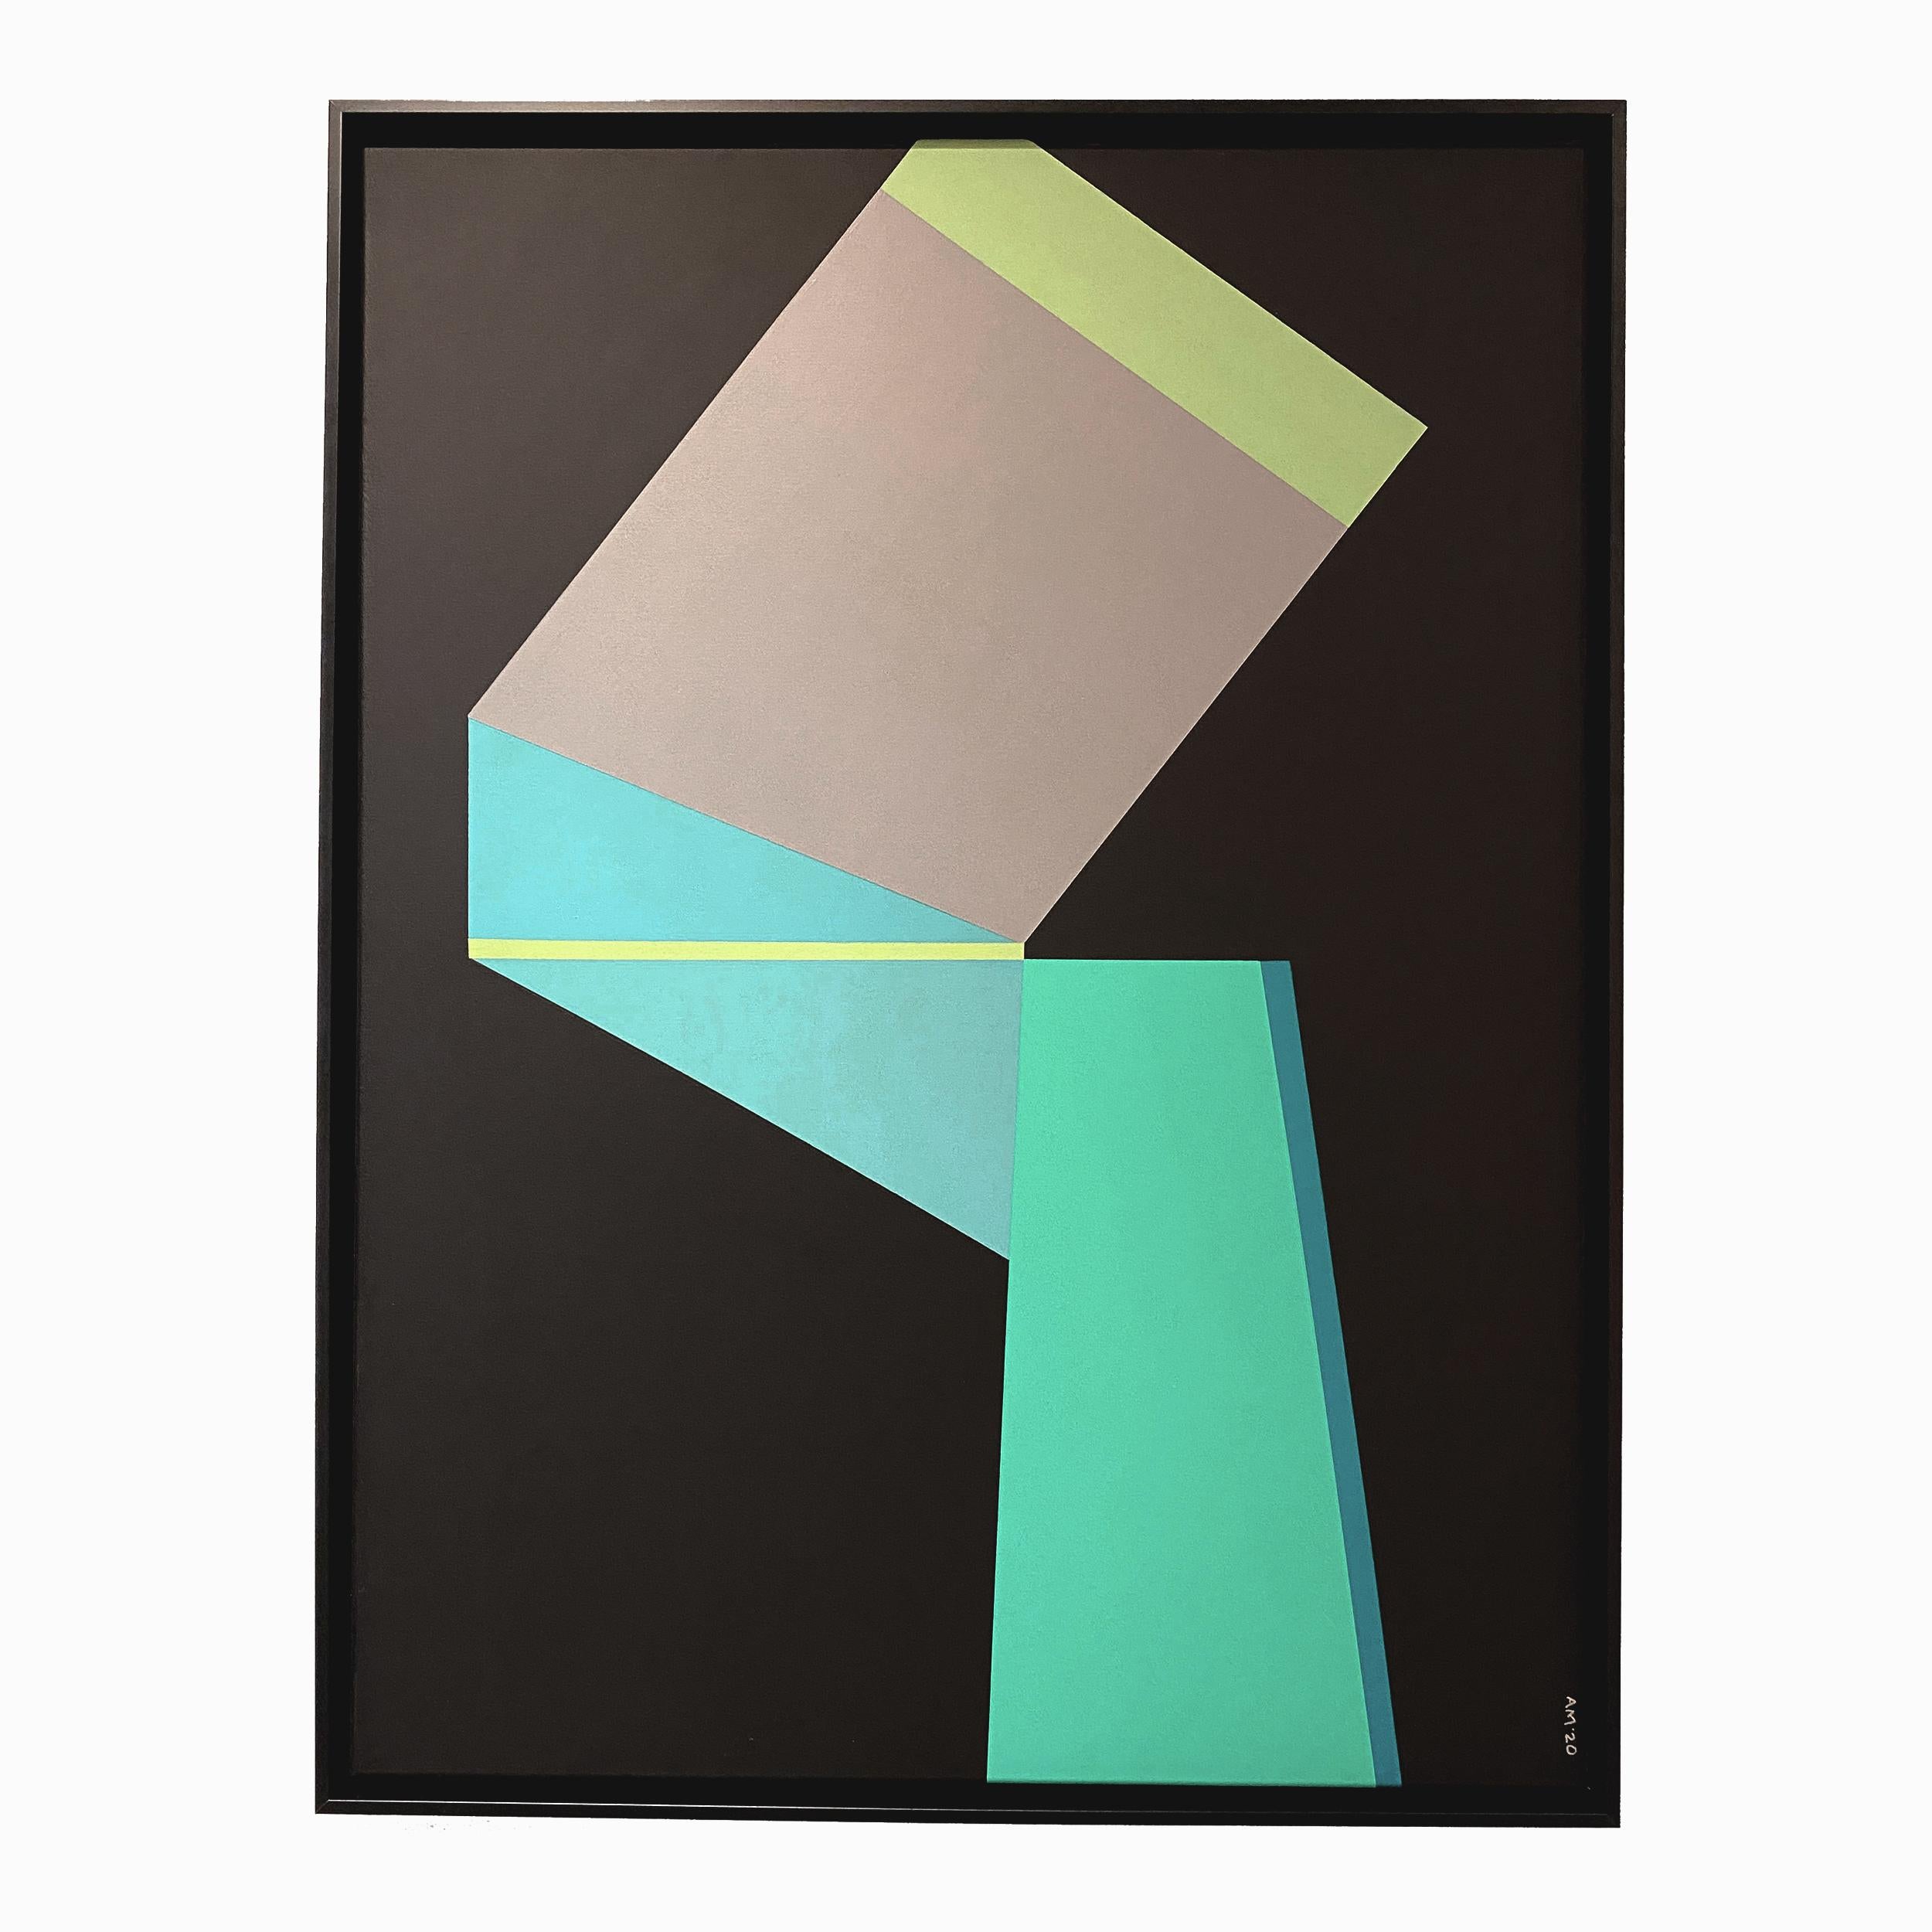 Andrew Mandolene
”Grey Gig”
Acrylic on canvas
Framed 

Dimension:
Unframed - 36